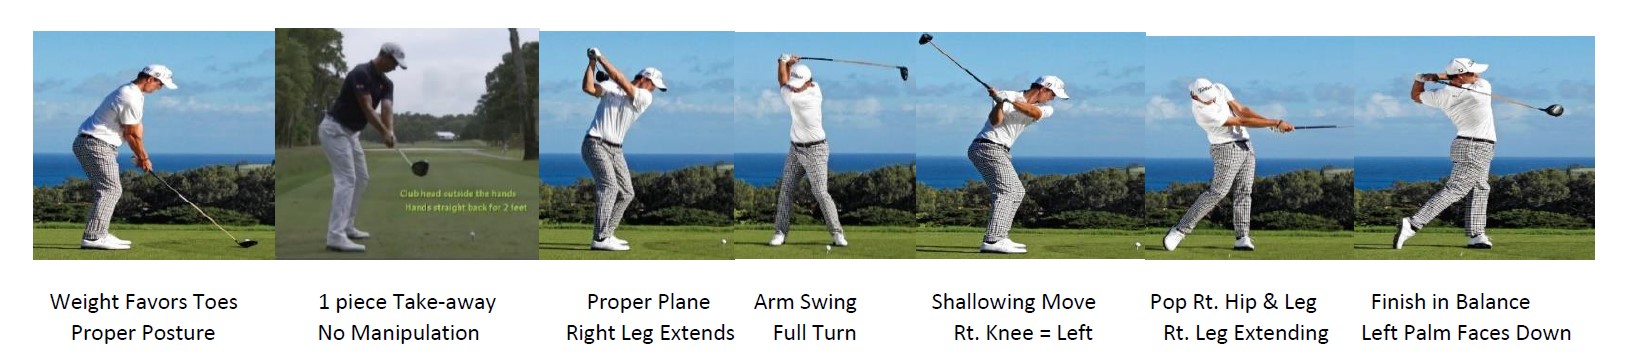 Golf Swing example